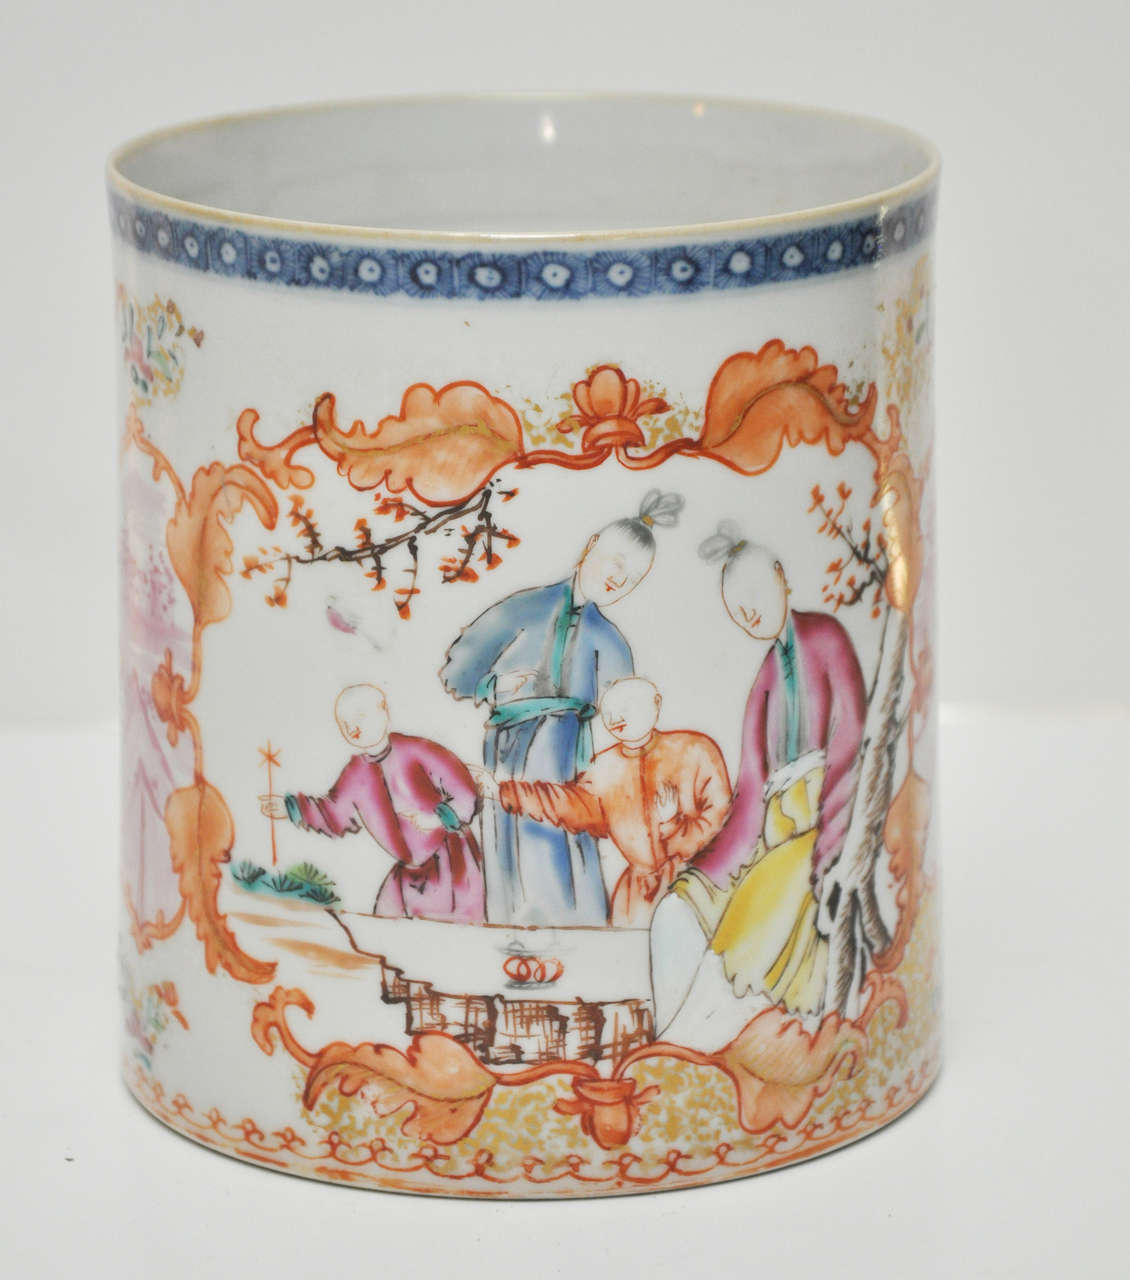 Porcelain Unusual Large Famille Rose Mug, China for the Western Trade, circa 1800